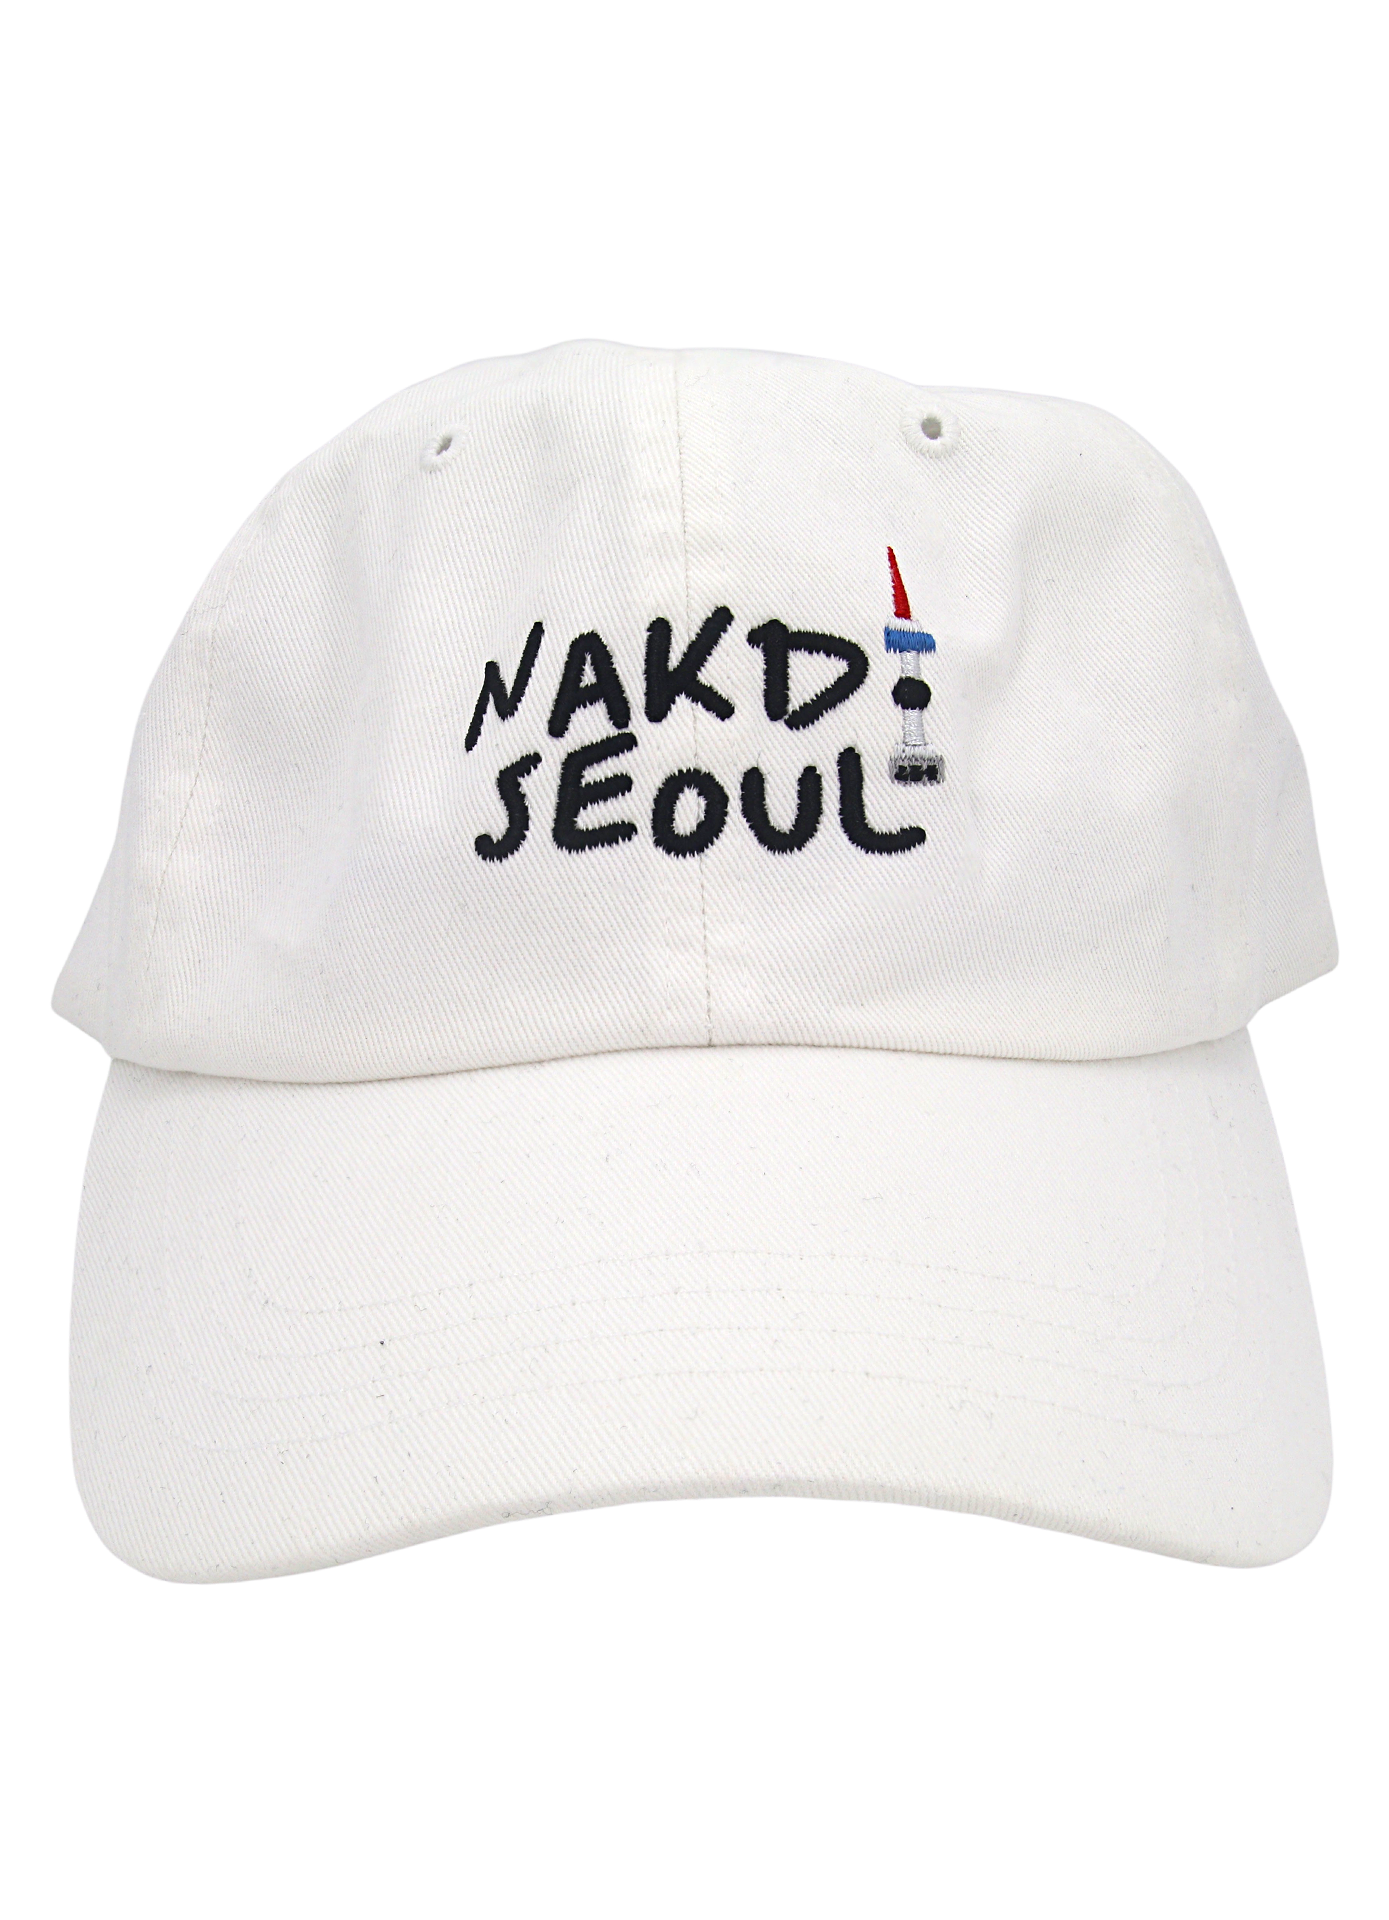 NAKD SEOUL Namsan Tower Dad Hat Made By NAKD